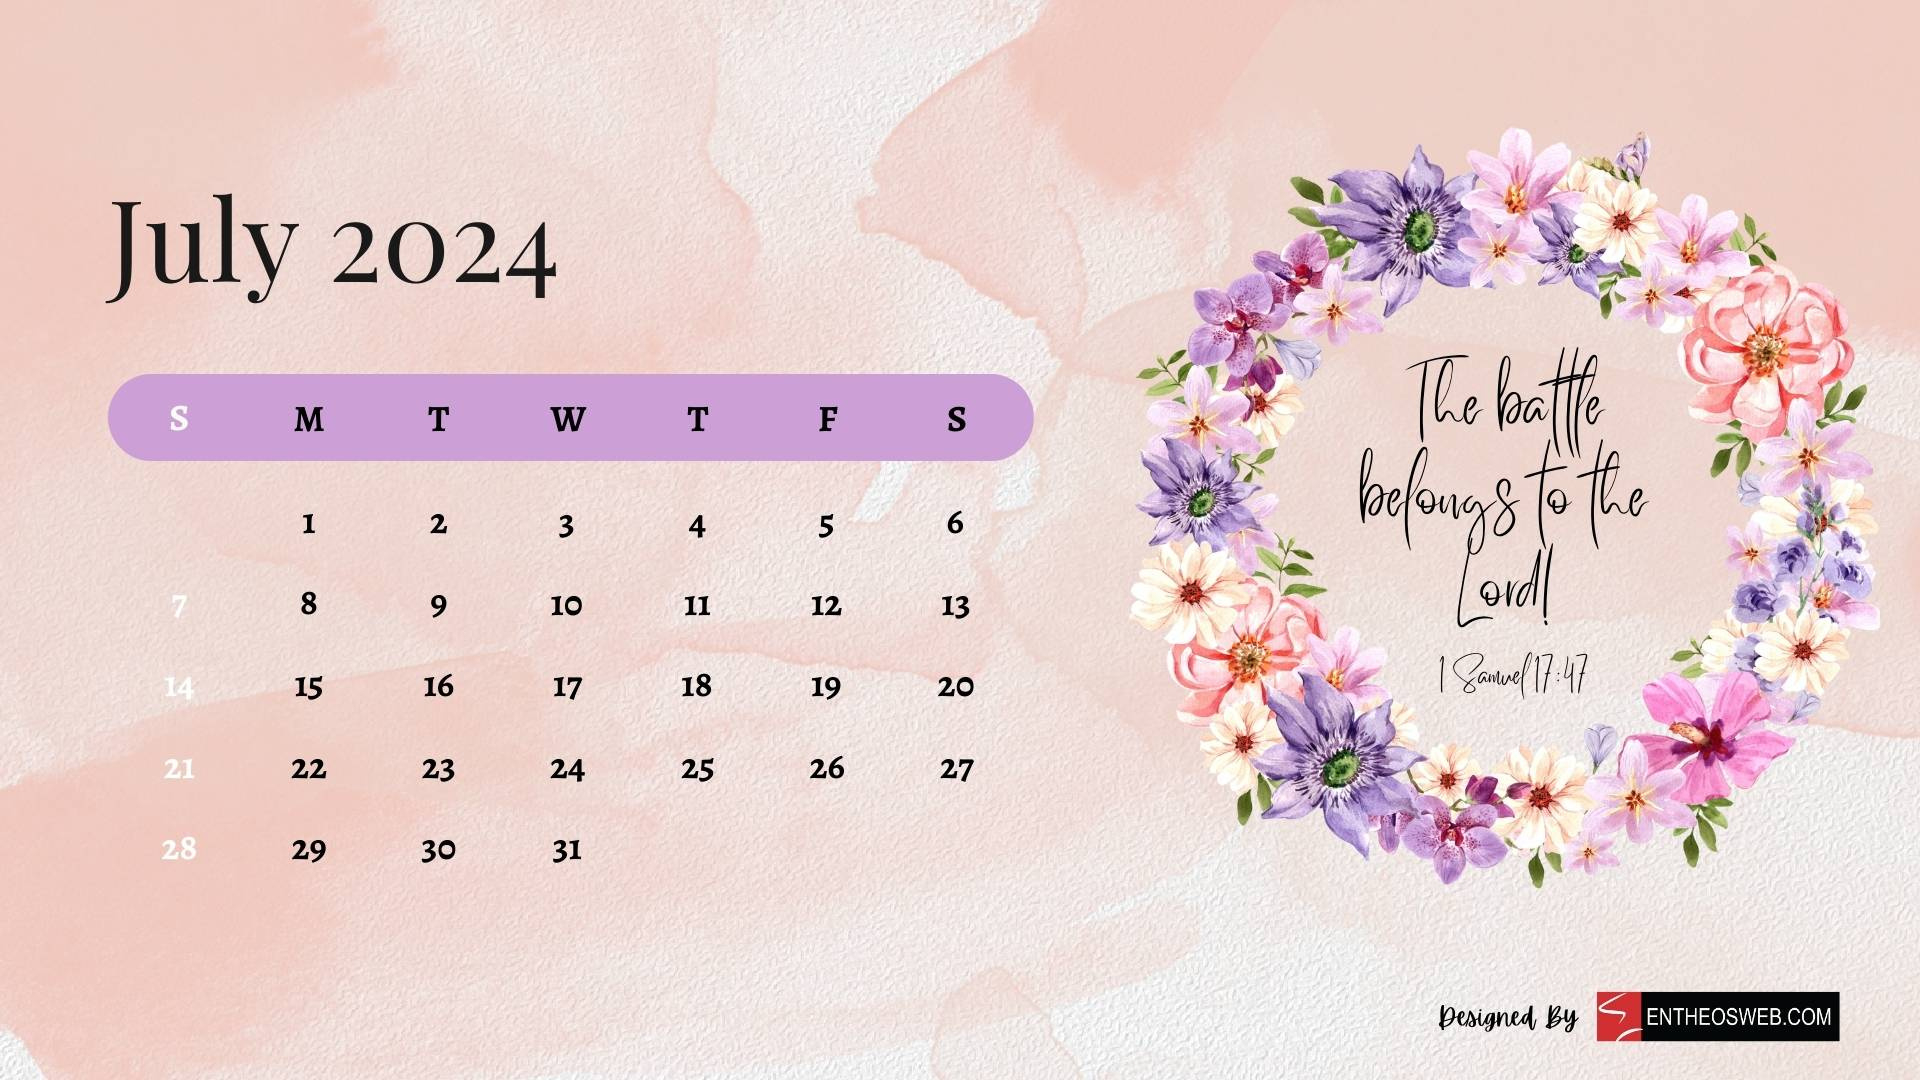 July 2024 Desktop Wallpaper Calendar | Entheosweb intended for July 2024 Desktop Calendar